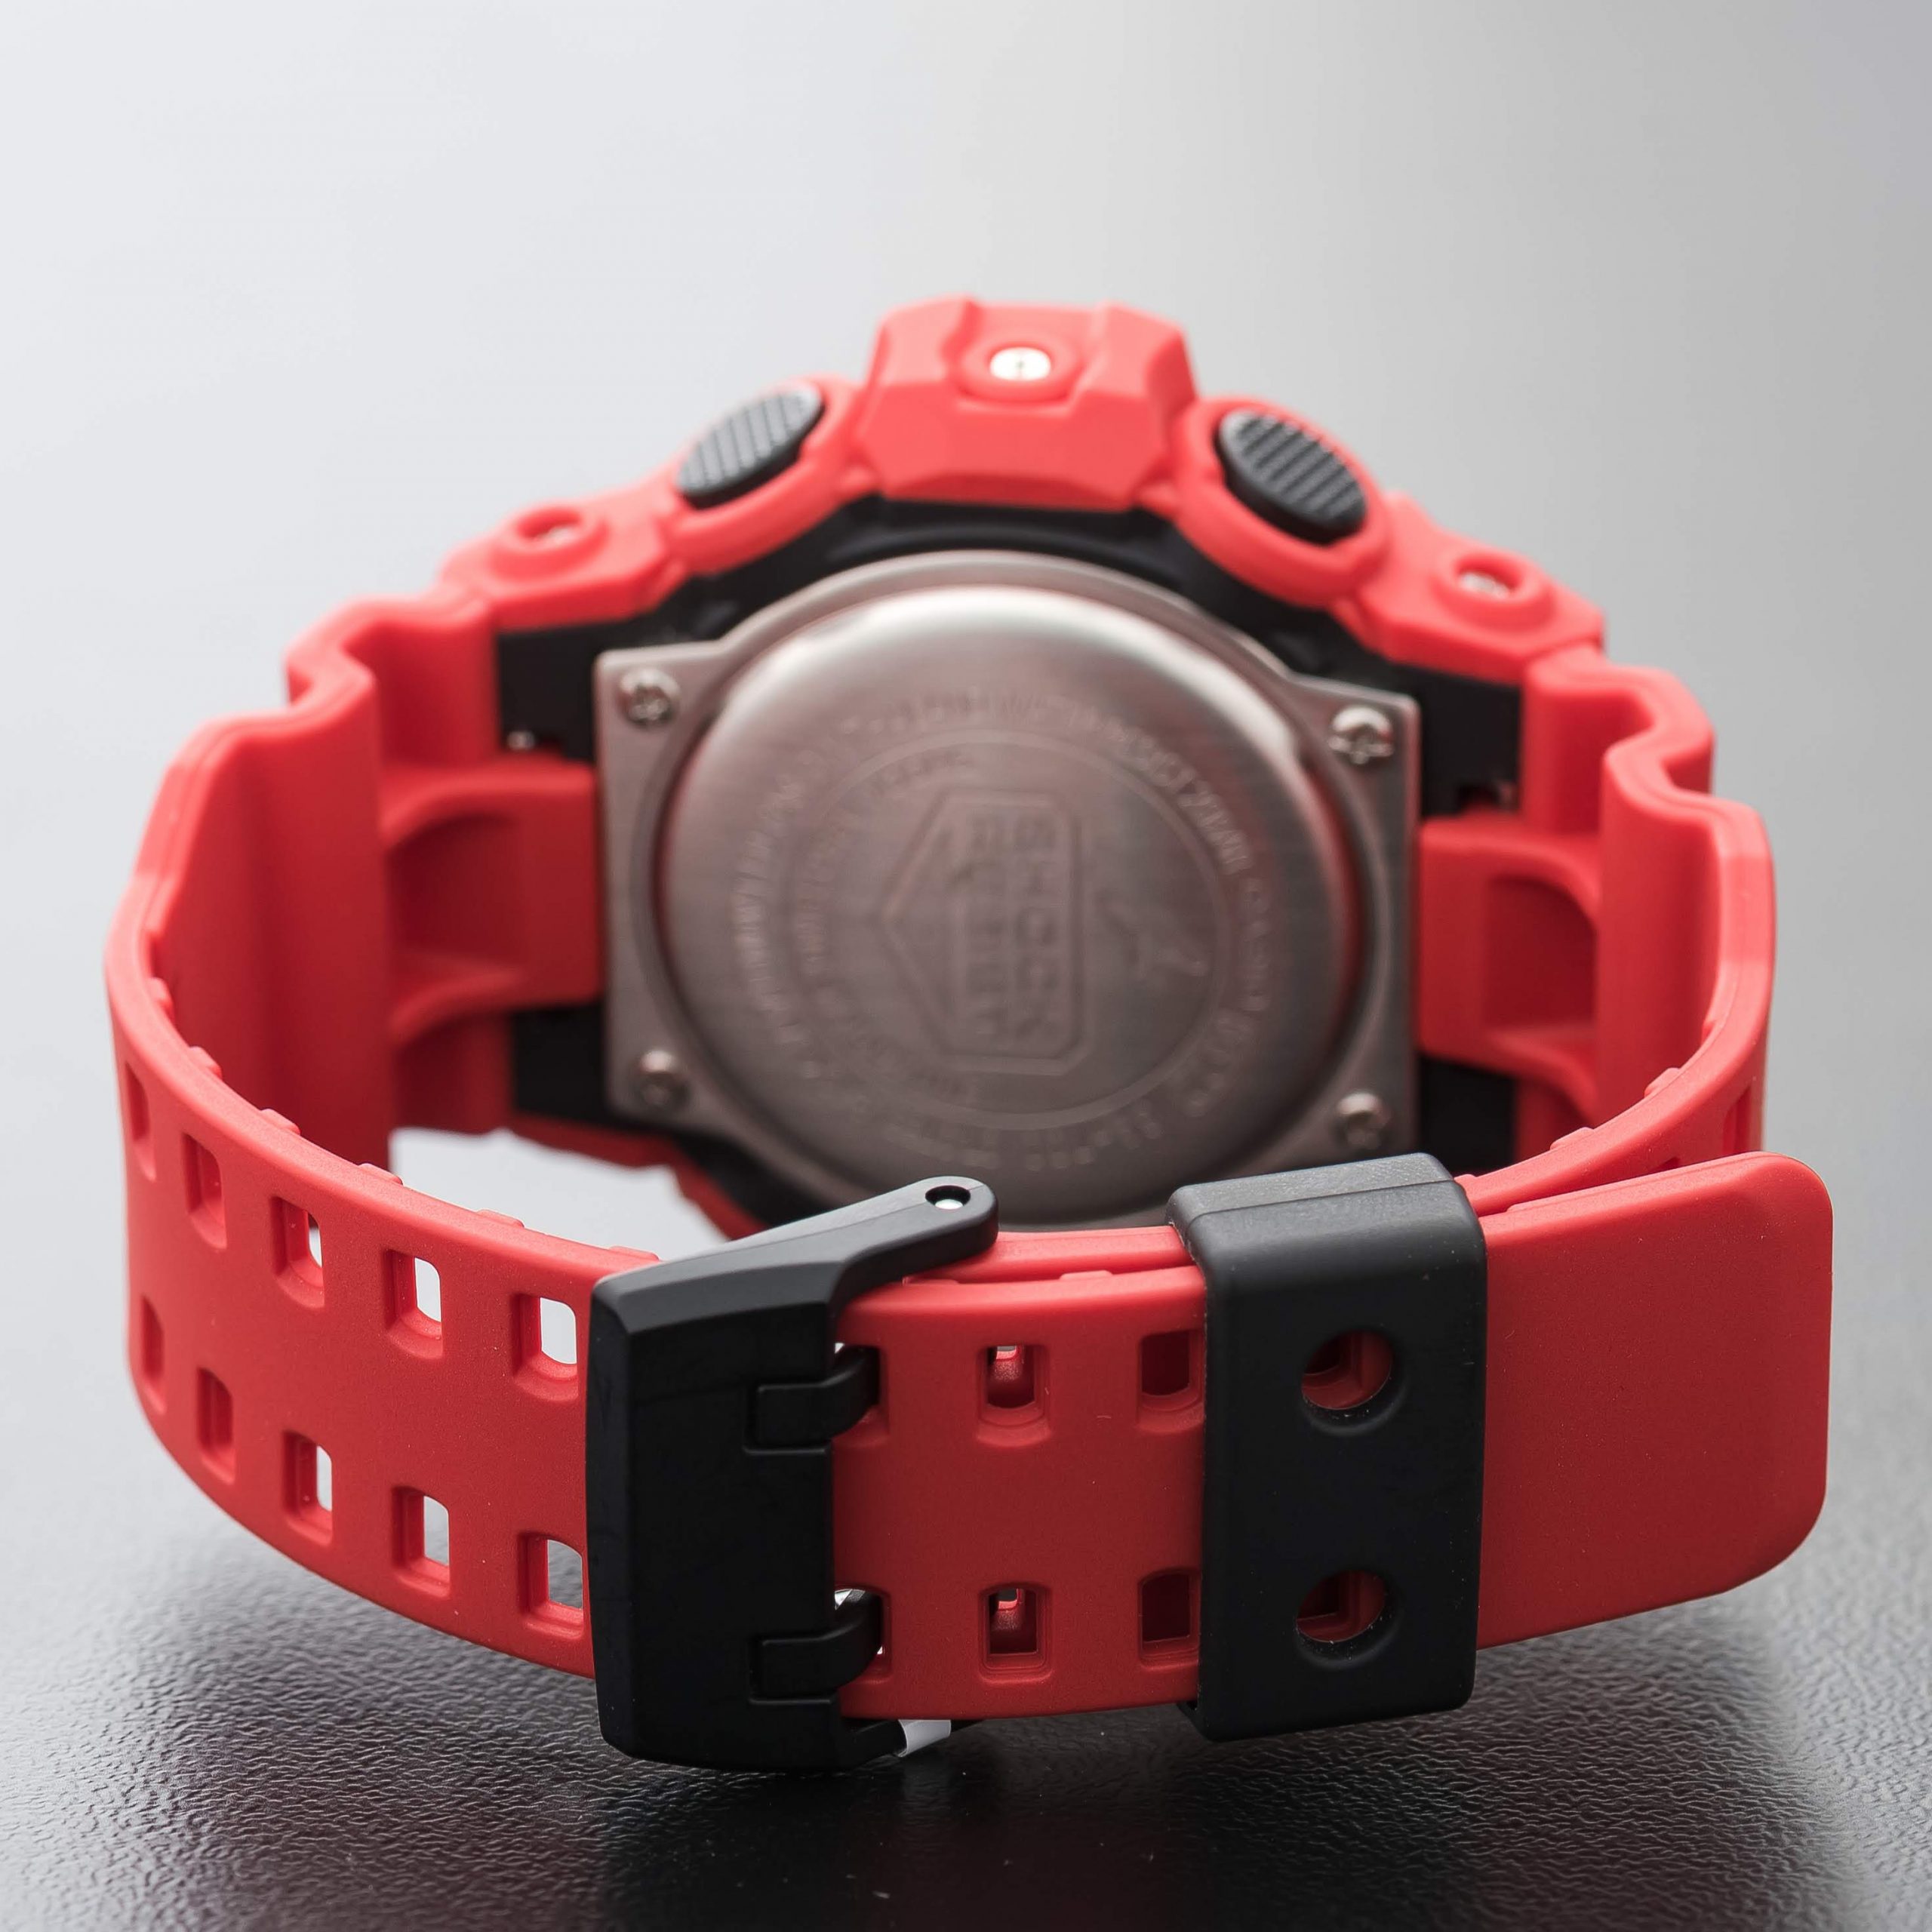 Casio G-Shock Analog Digital Red Resin World Time Stopwatch Watch GA-700-4ACR